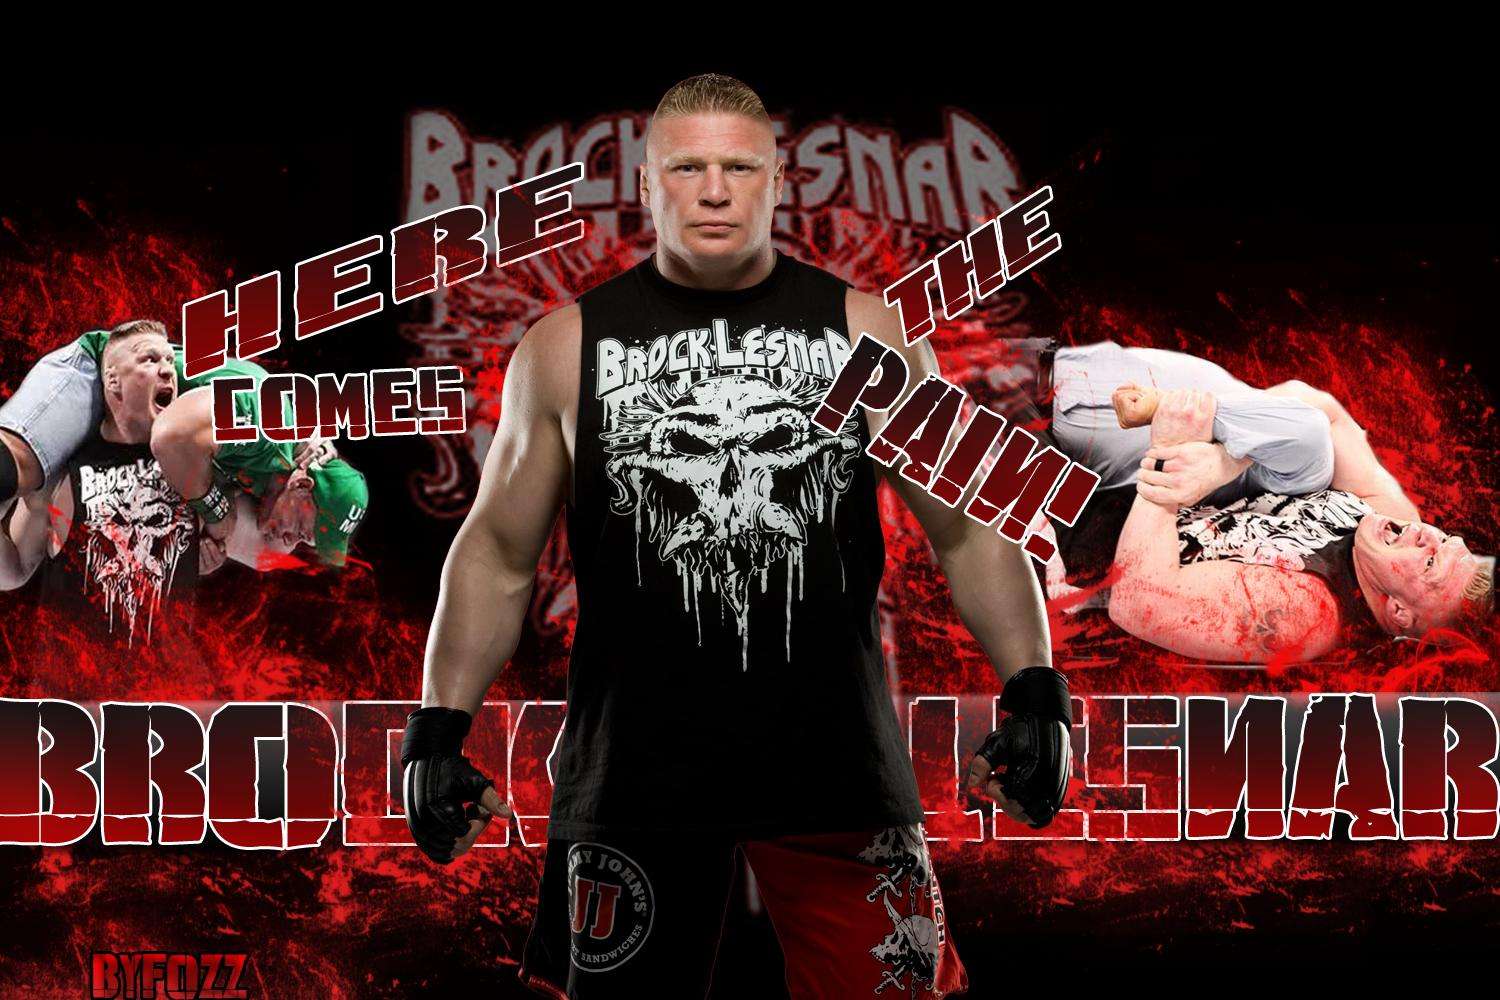 Brock Lesnar Wallpaper Best Collection Of WWE Wrestler